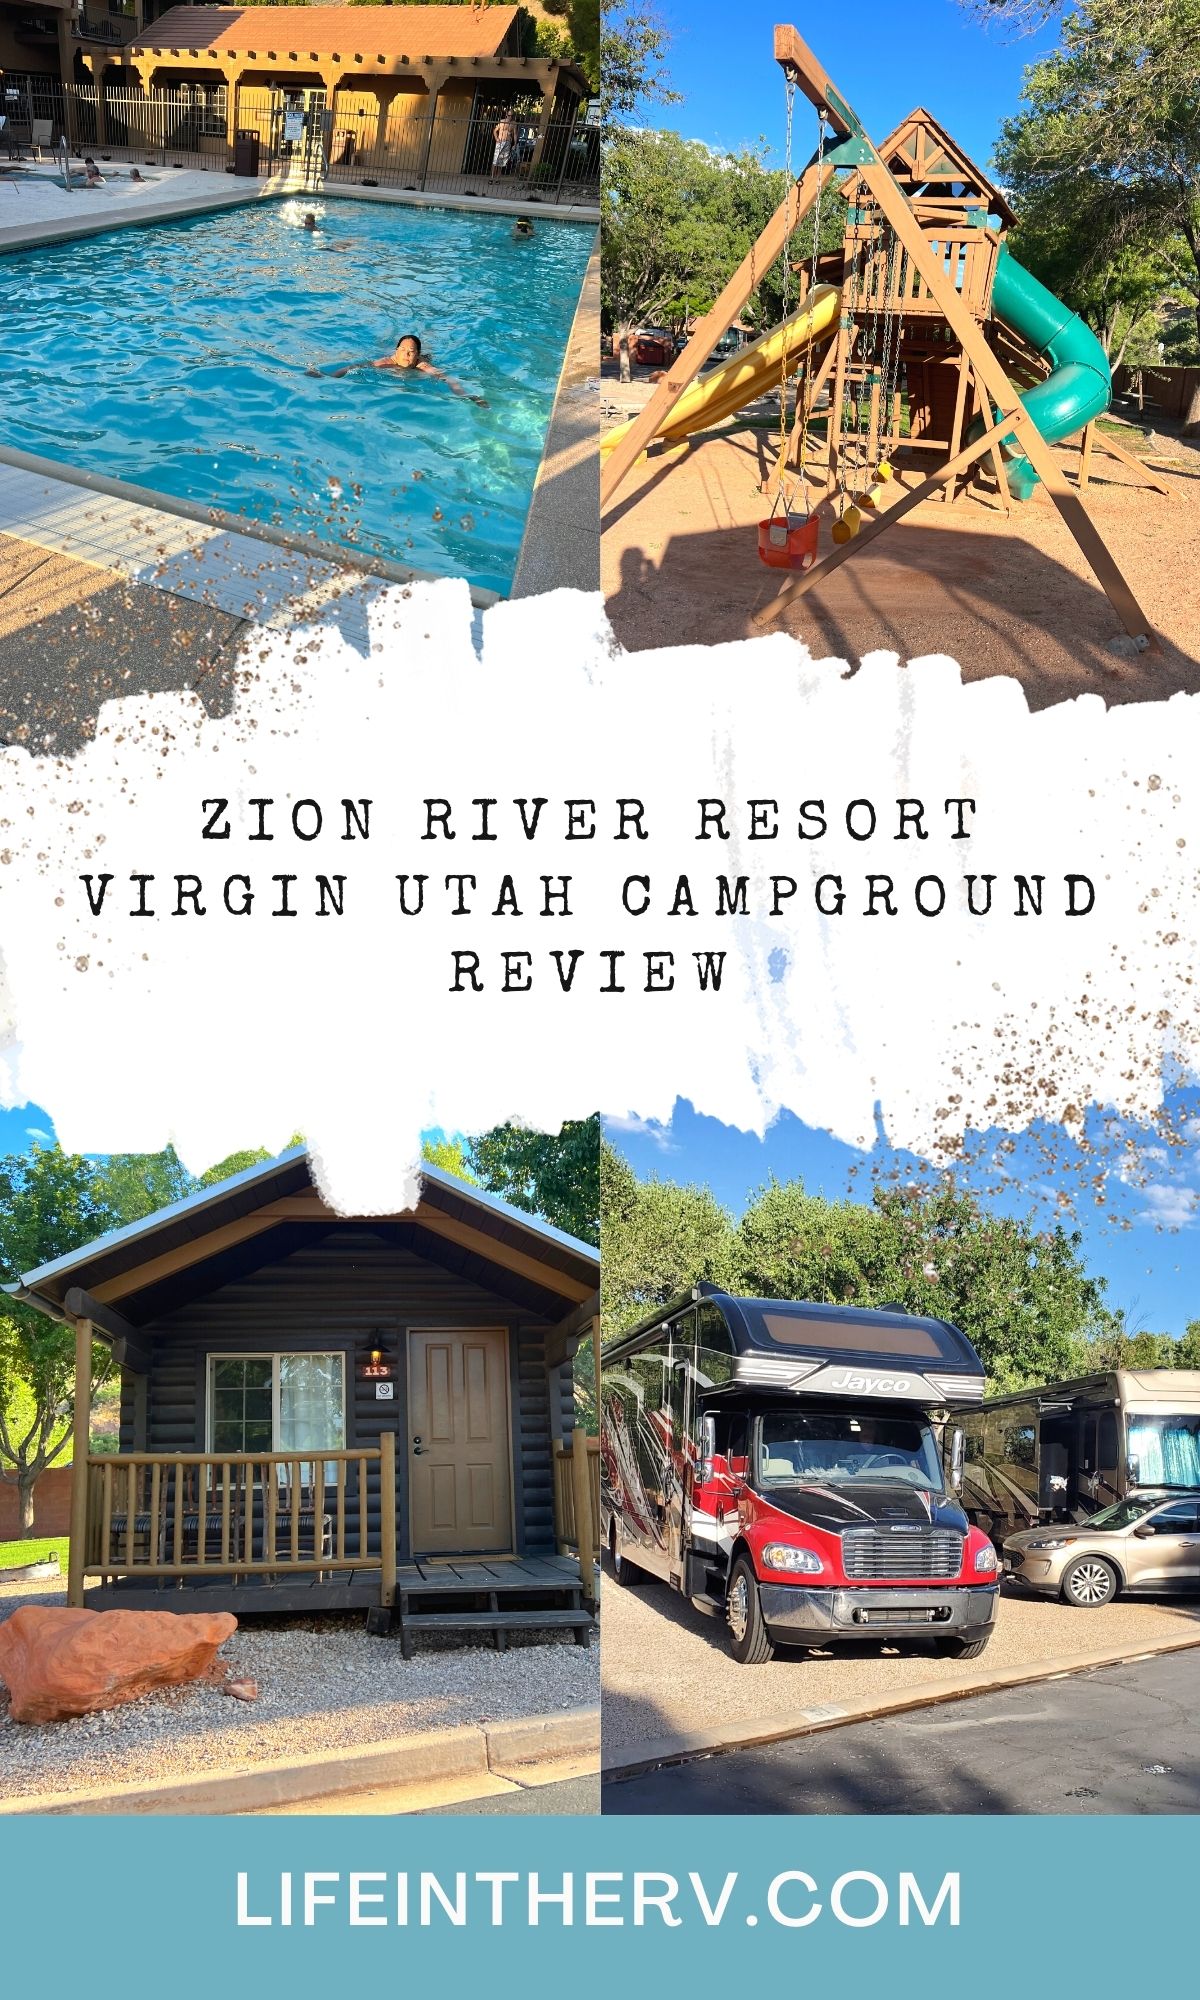 Zion river resort virgin utah campground review.